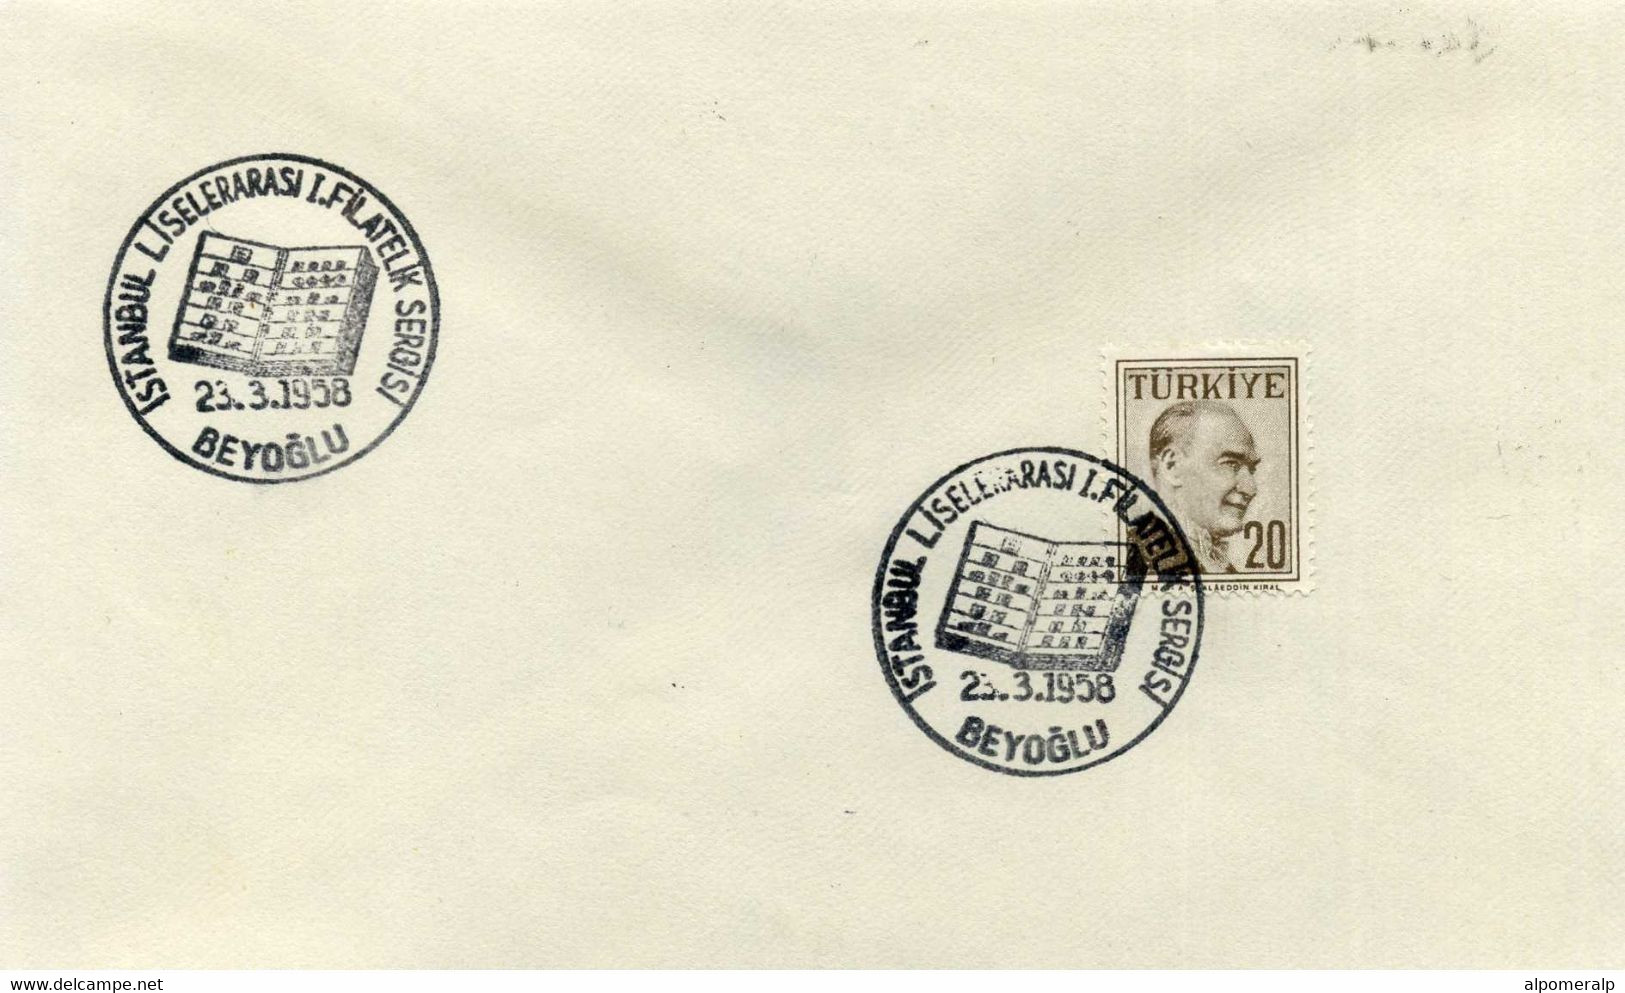 Turkey 1958 High Schools Philatelic Exhibition, Beyoglu, Mar. 23. | Book | Special Postmark - Briefe U. Dokumente